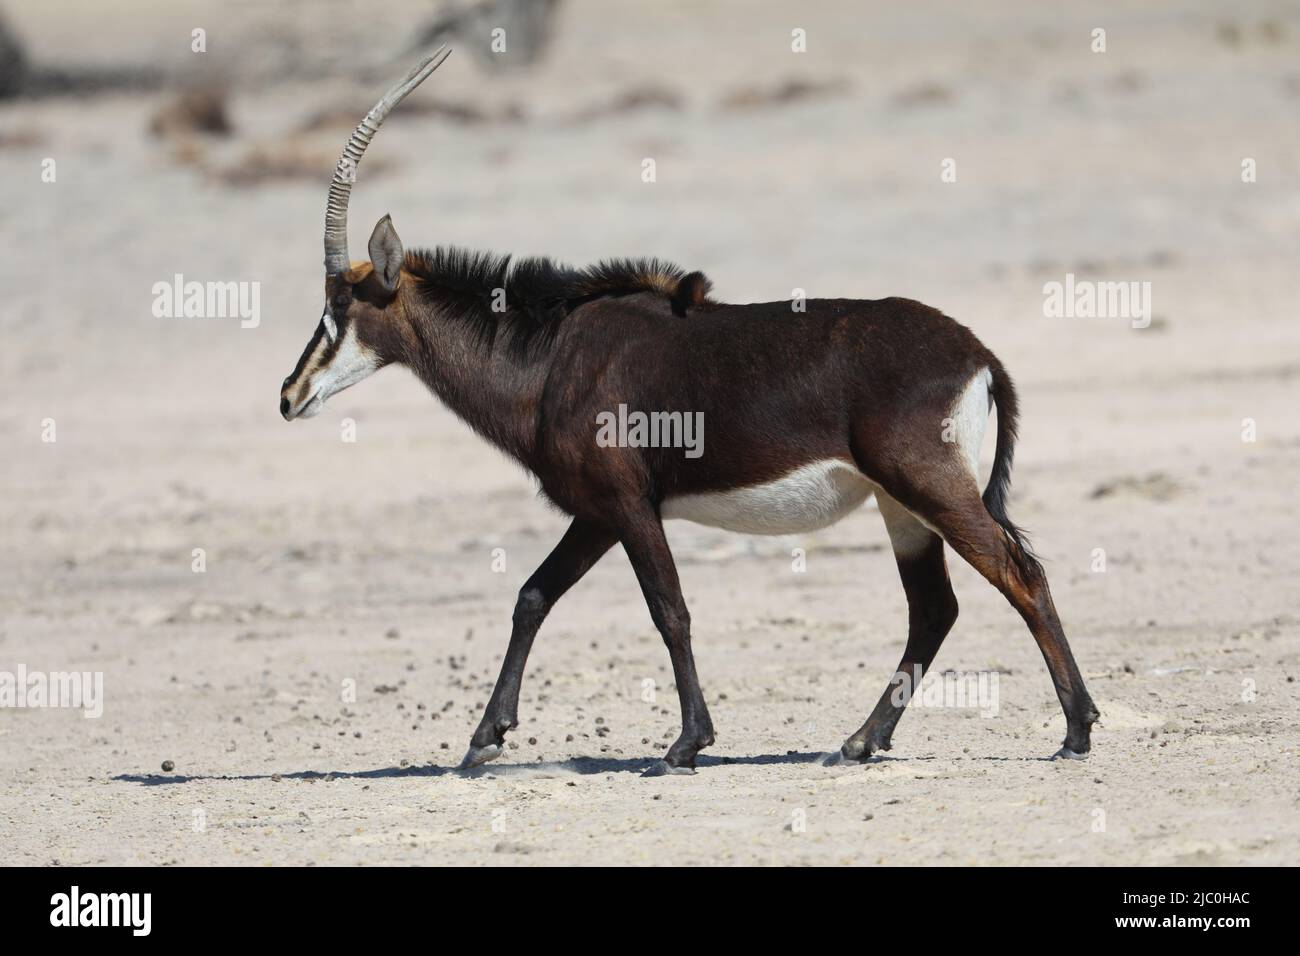 sable antelope Stock Photo